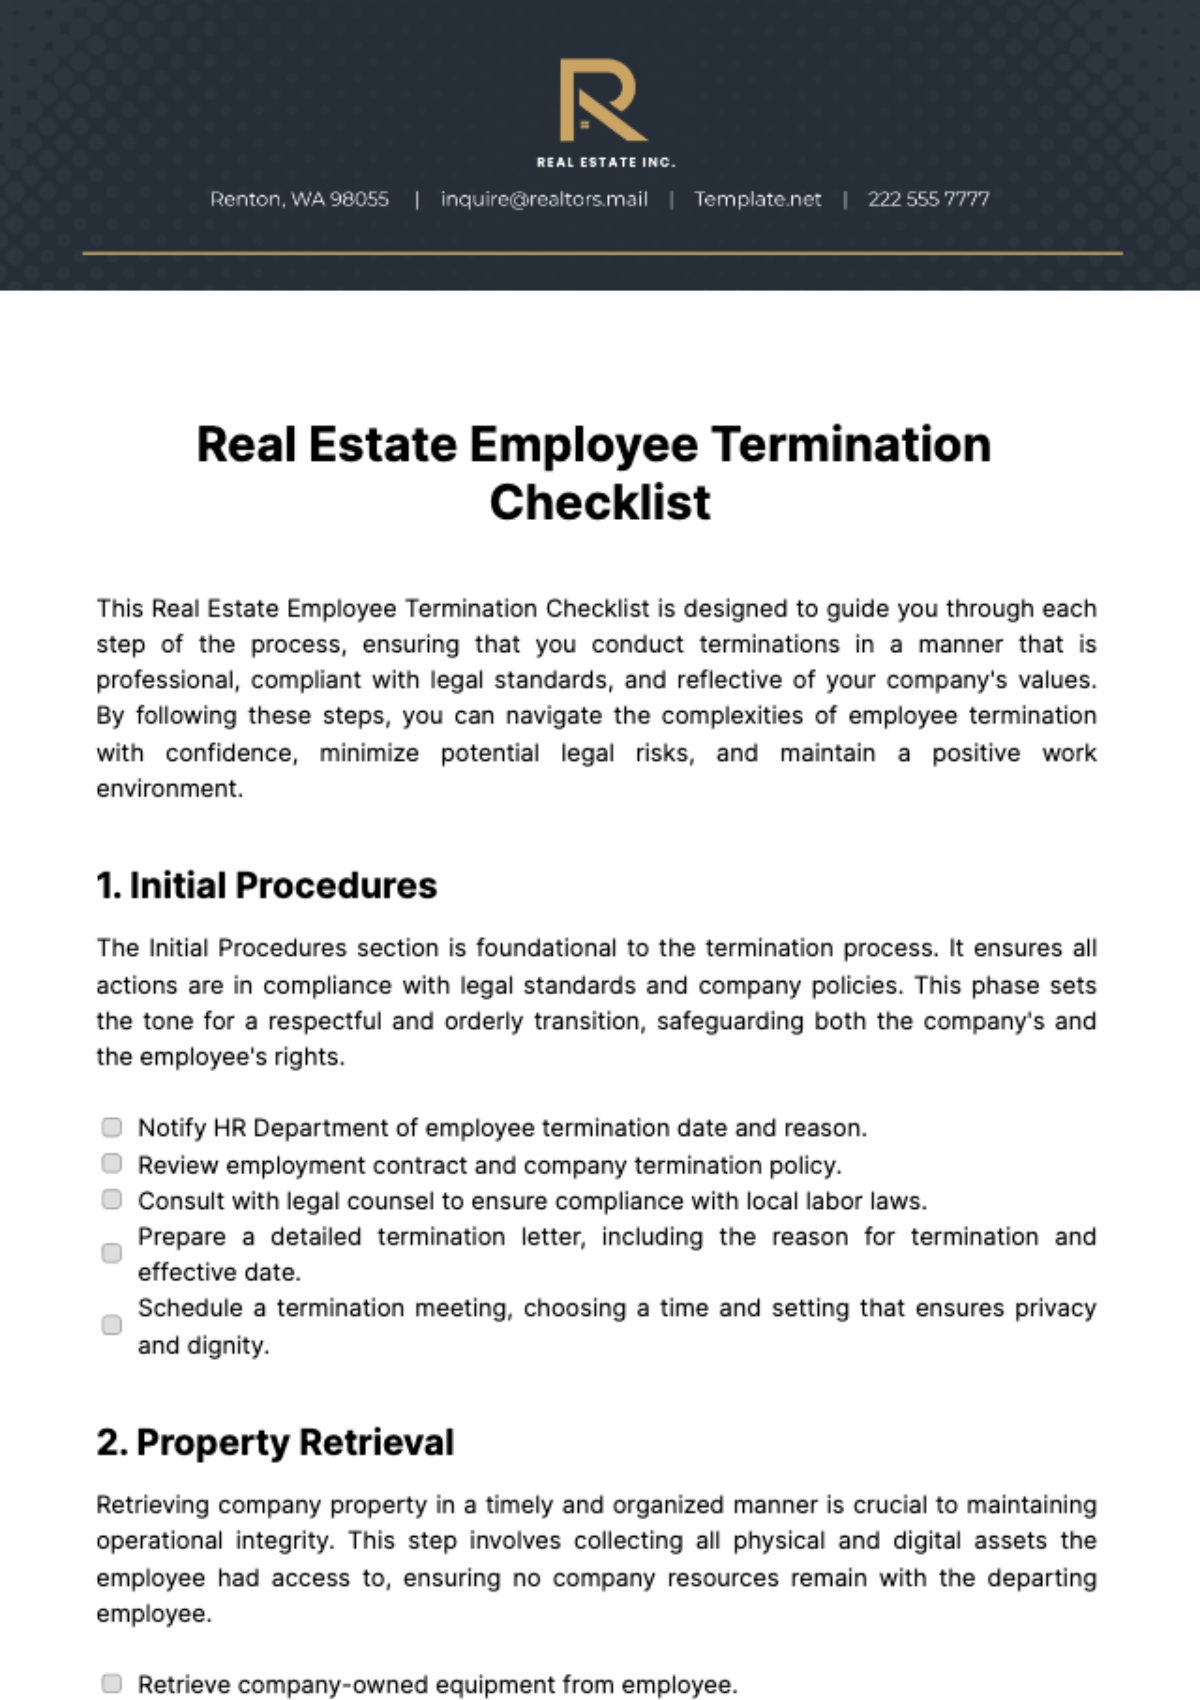 Real Estate Employee Termination Checklist Template